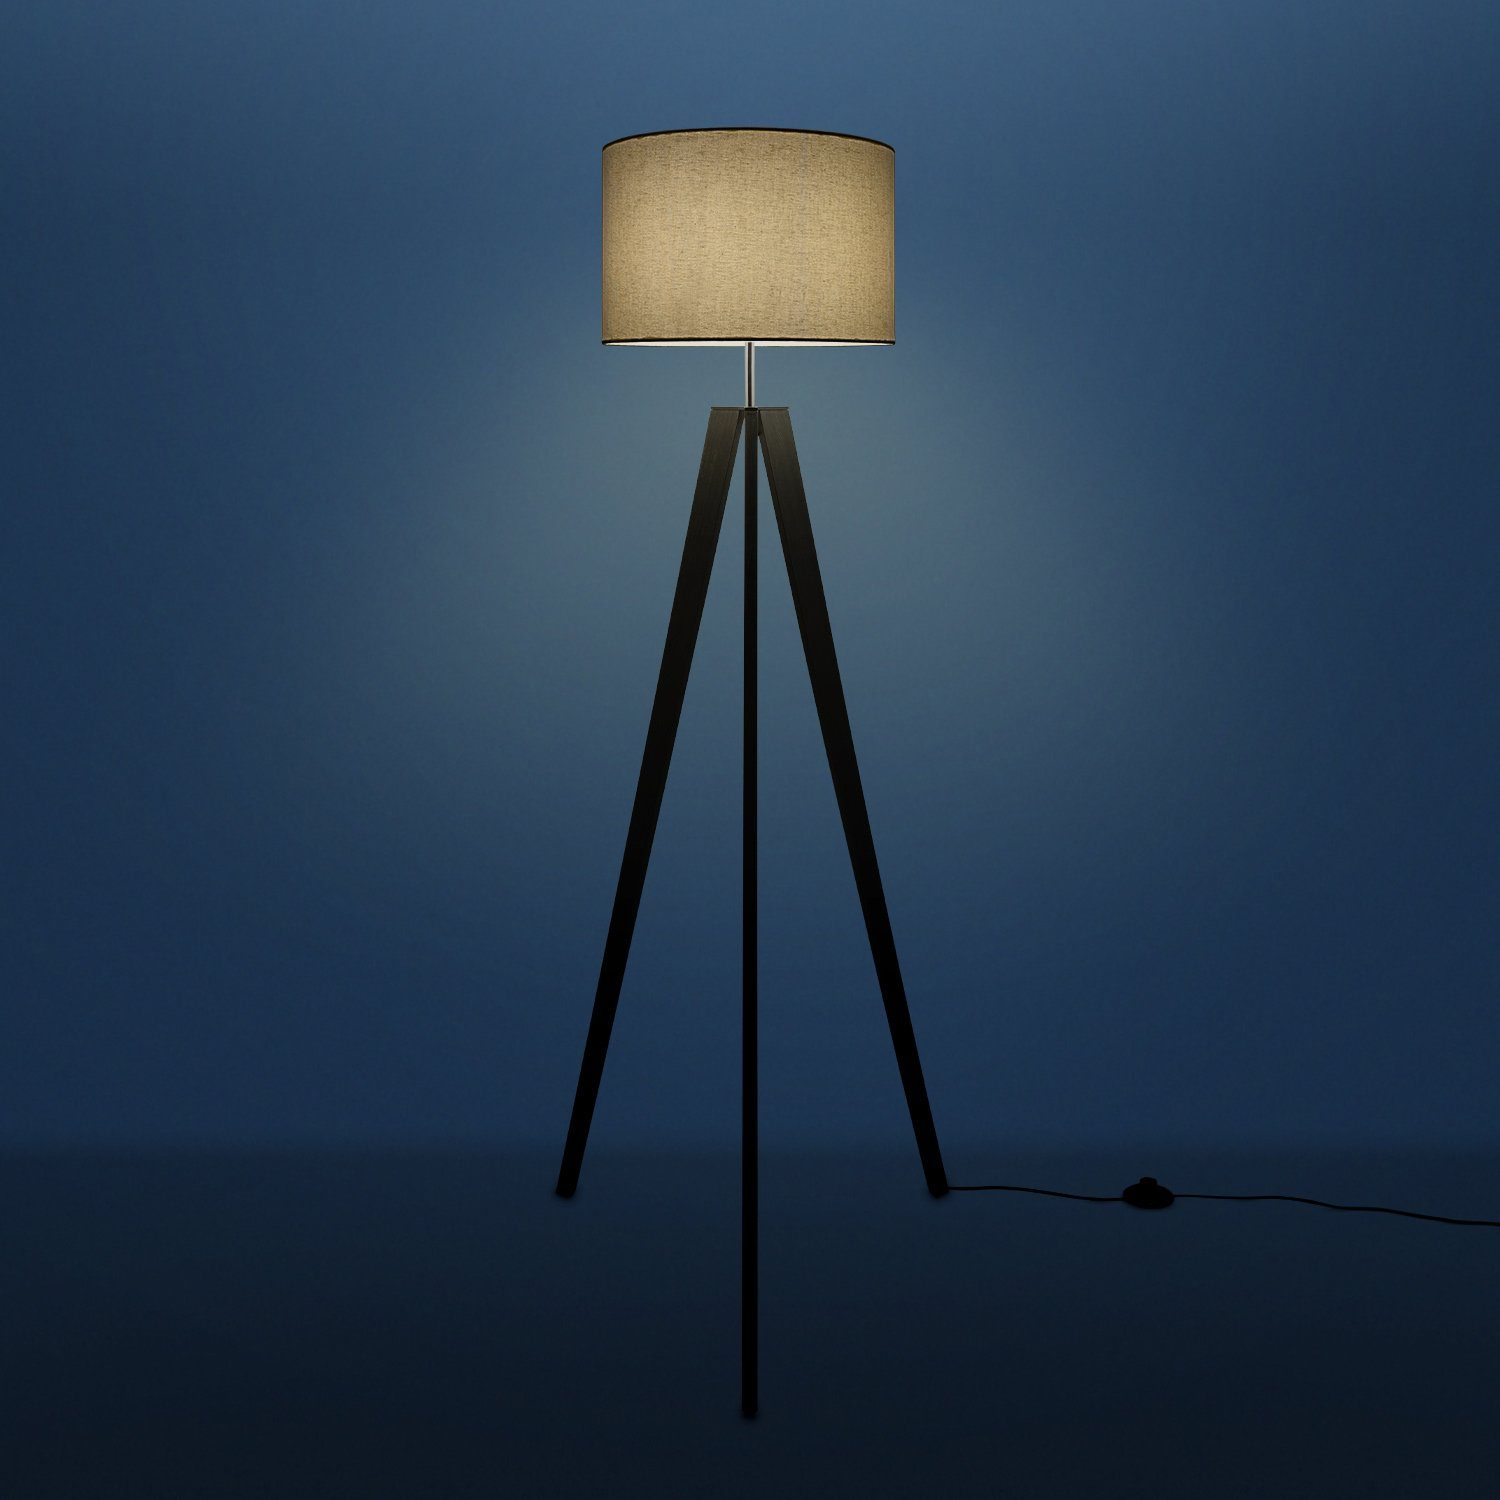 Paco Home Stehlampe Canvas uni ohne Fuß LED Vintage Stehlampe Wohnzimmer E27 Stil Leuchtmittel, Lampe Skandinavischer Color